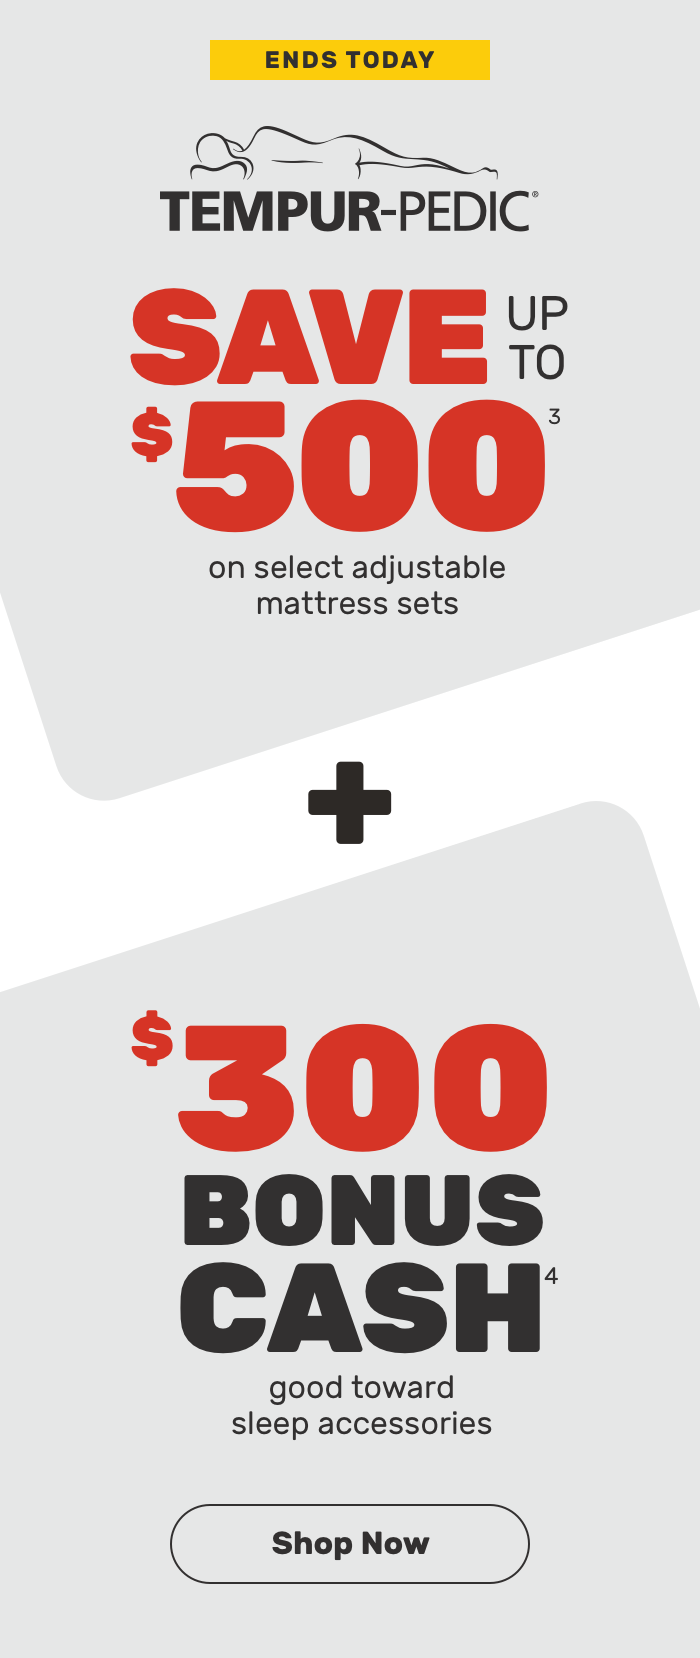 Ends Today. Save up to $400 on select Tempur-Pedic adjustable mattress sets plus $200 bonus cash good toward sleep accessories. Shop Now.